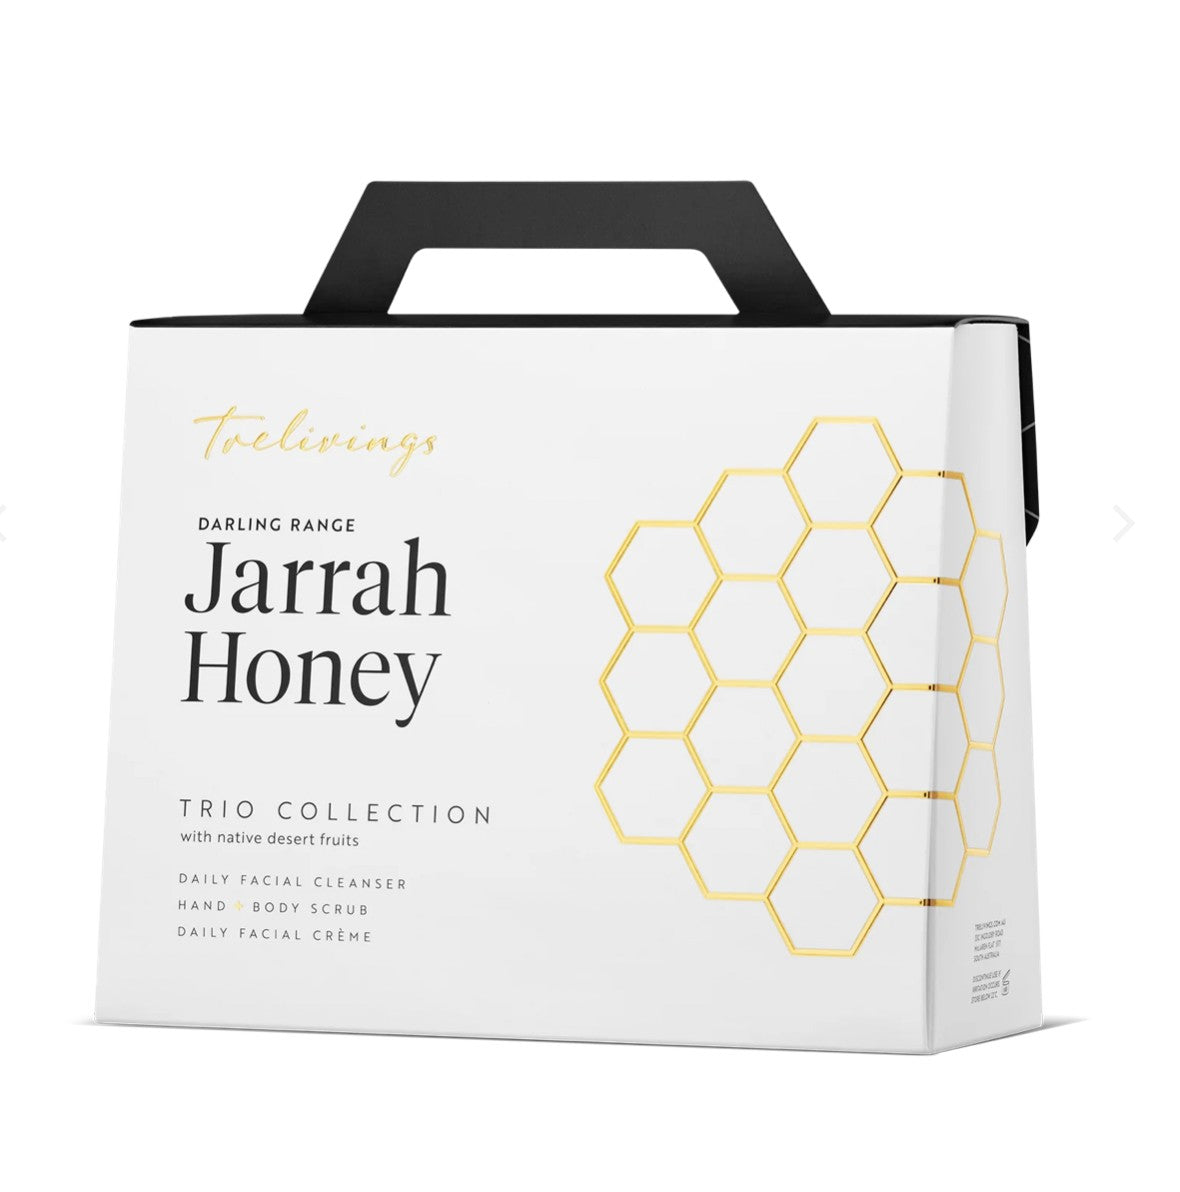 Darling Range Jarrah Honey - Trio Collection